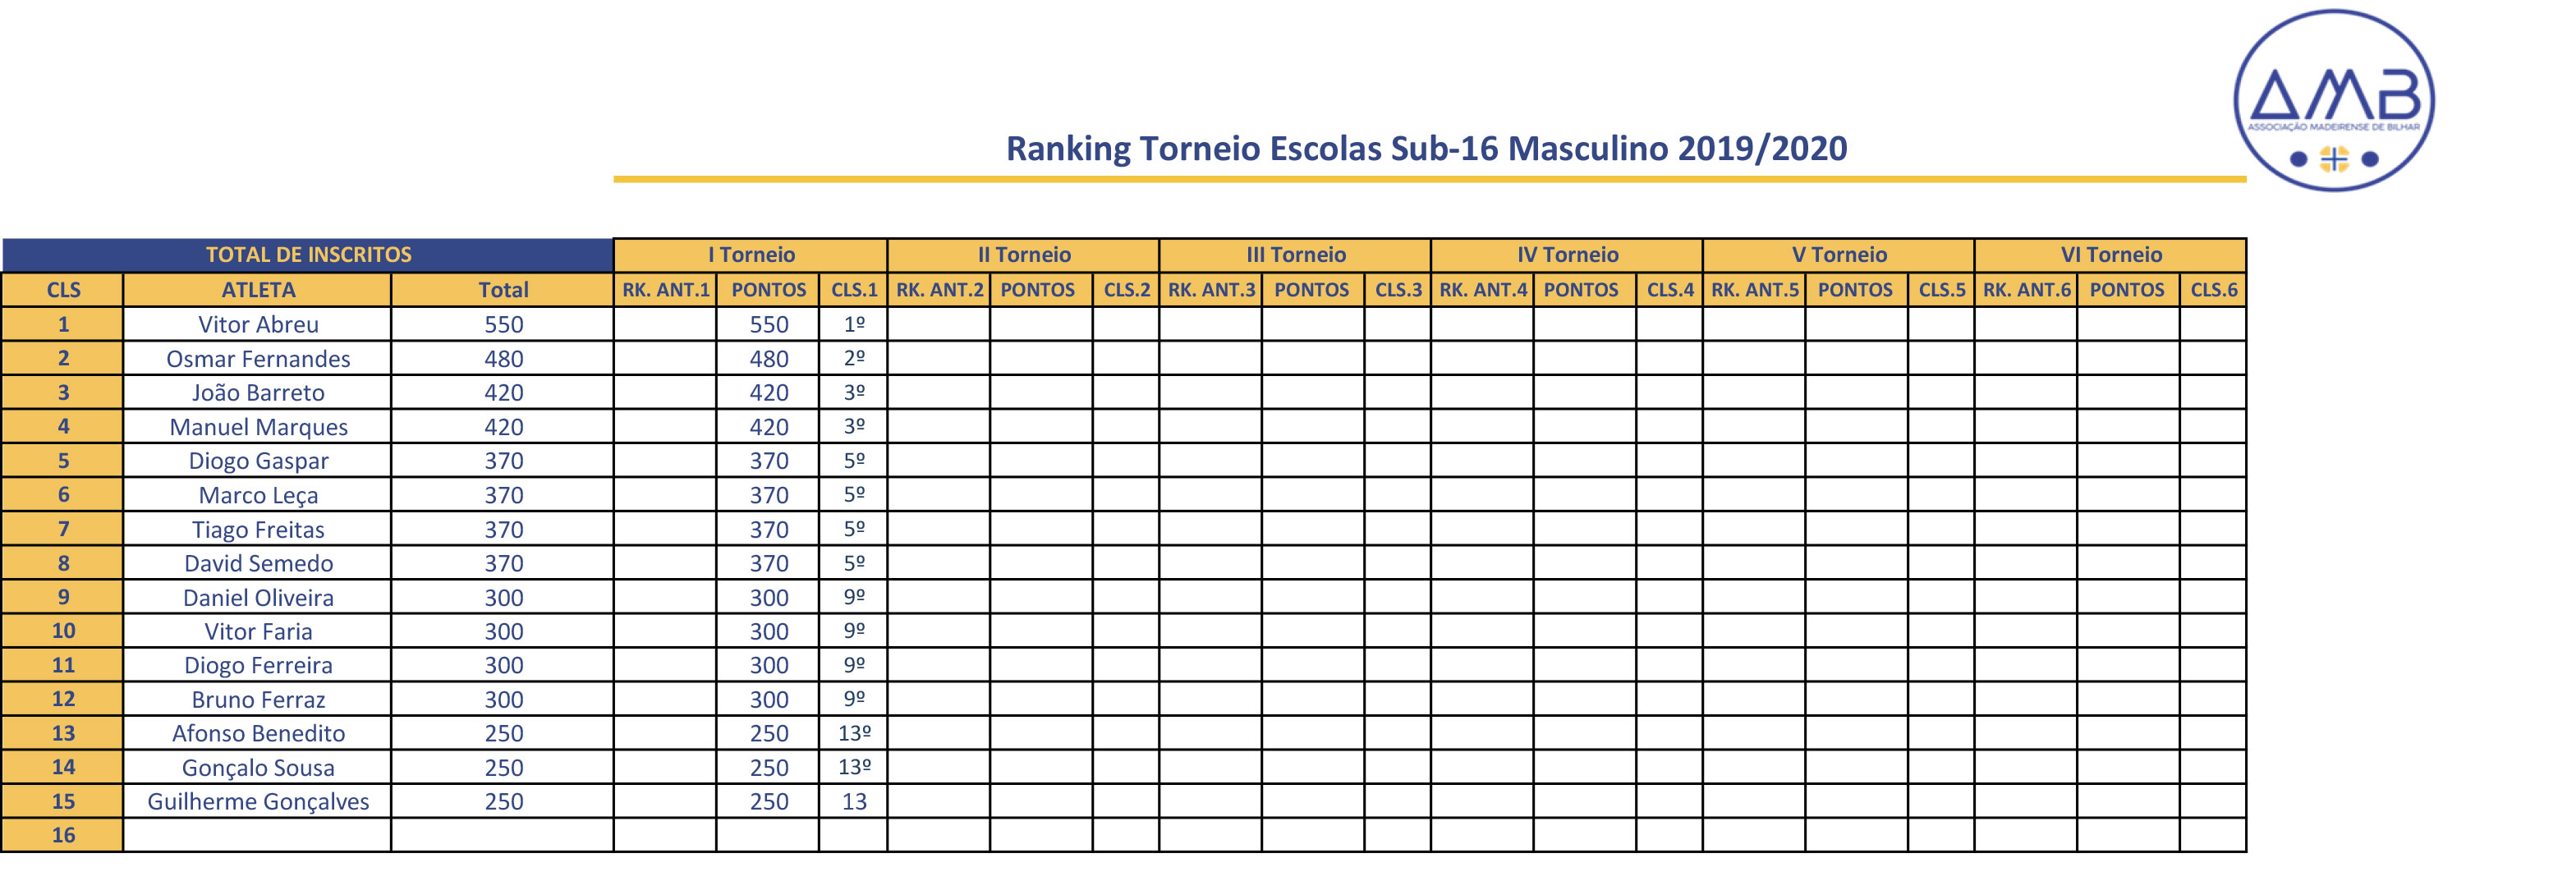 Ranking Torneio Escolas Sub-21 Masculino - Época 2019/2020 Diagrama